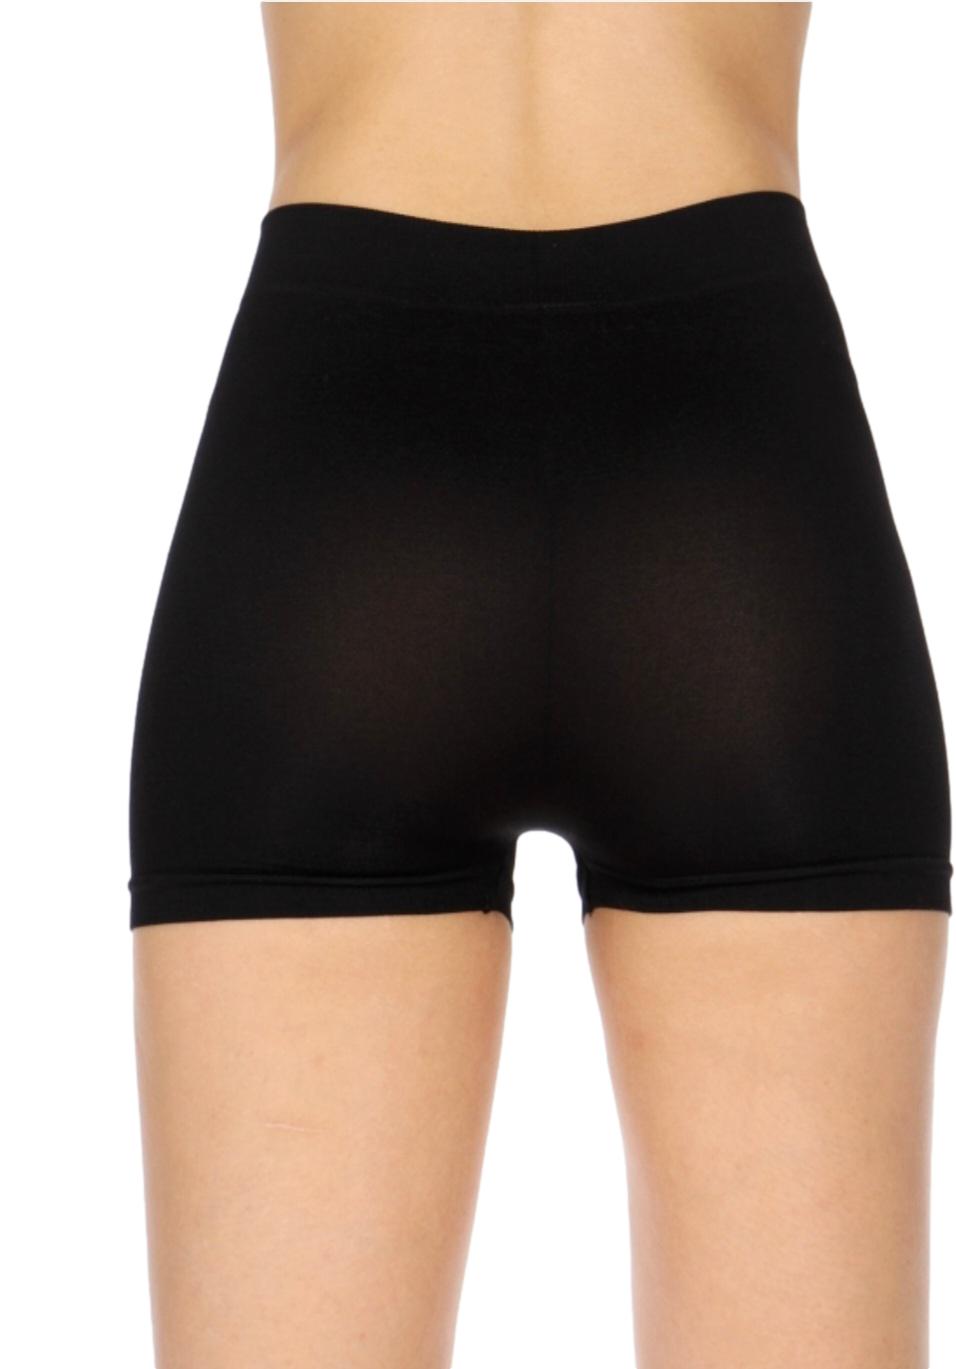 Women's Black Seamless Stretchy Knit Biker Shorts